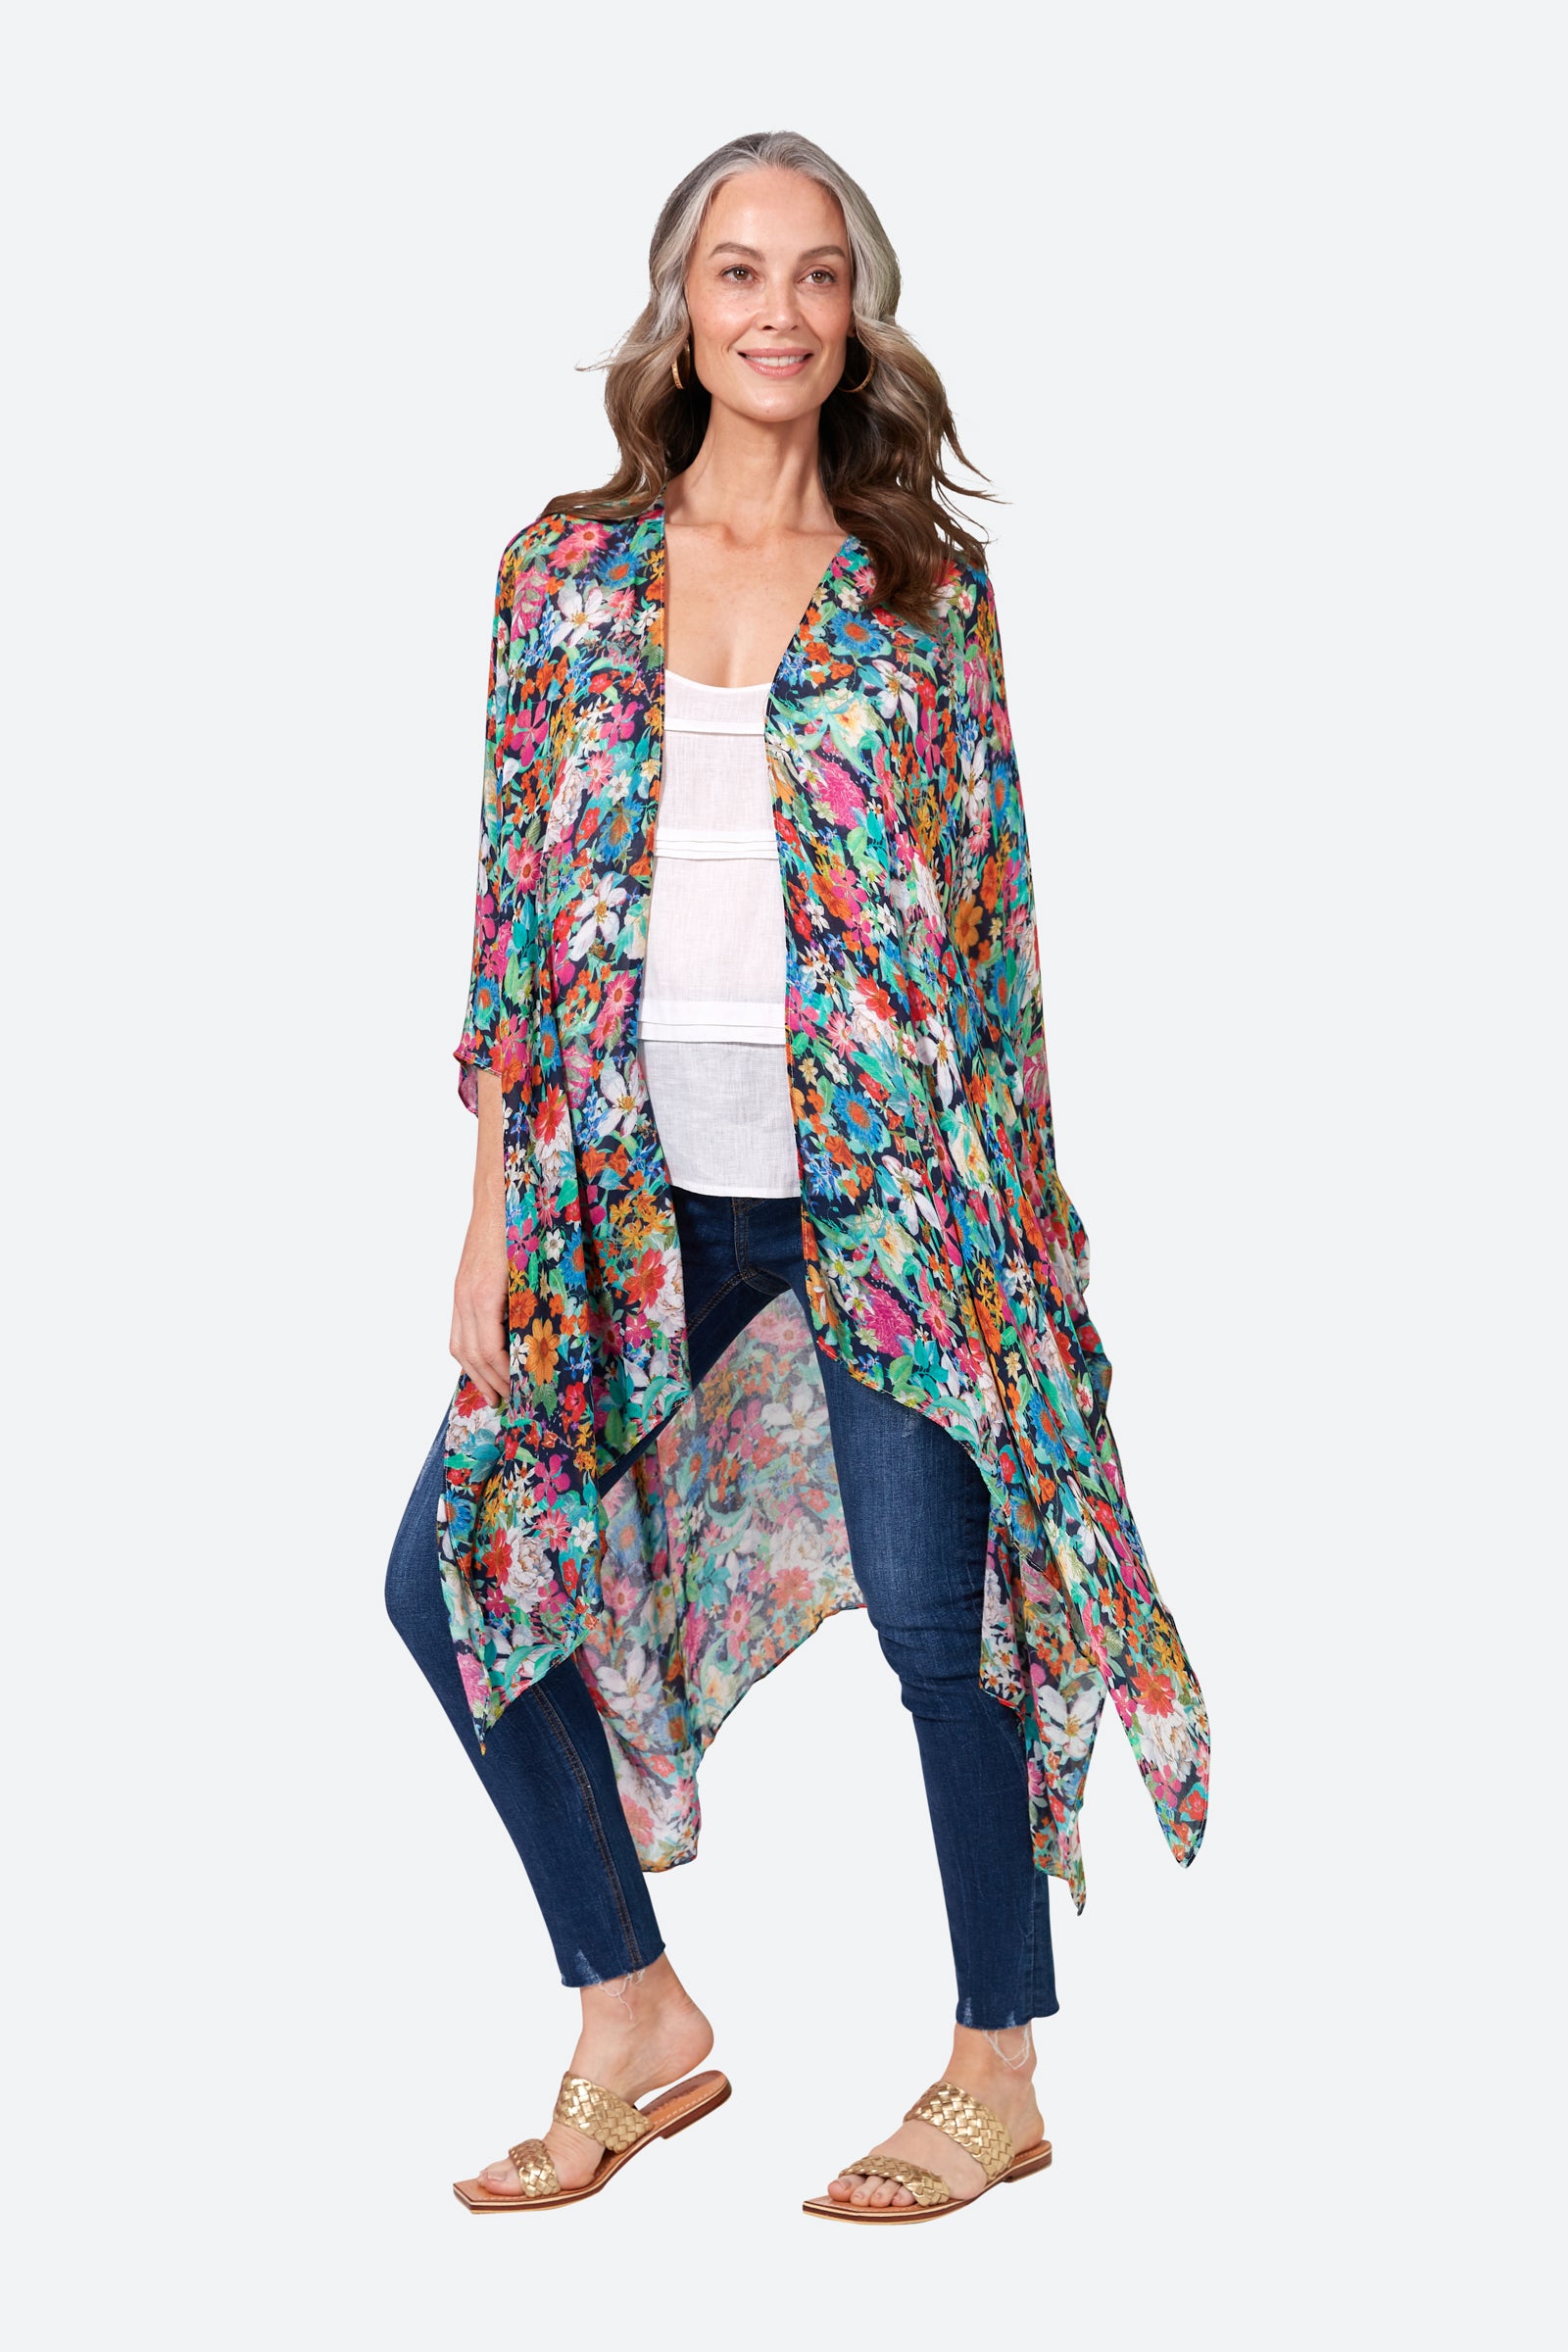 Esprit Cape - Navy Flourish - eb&ive Clothing - Kimono Cape Long One Size